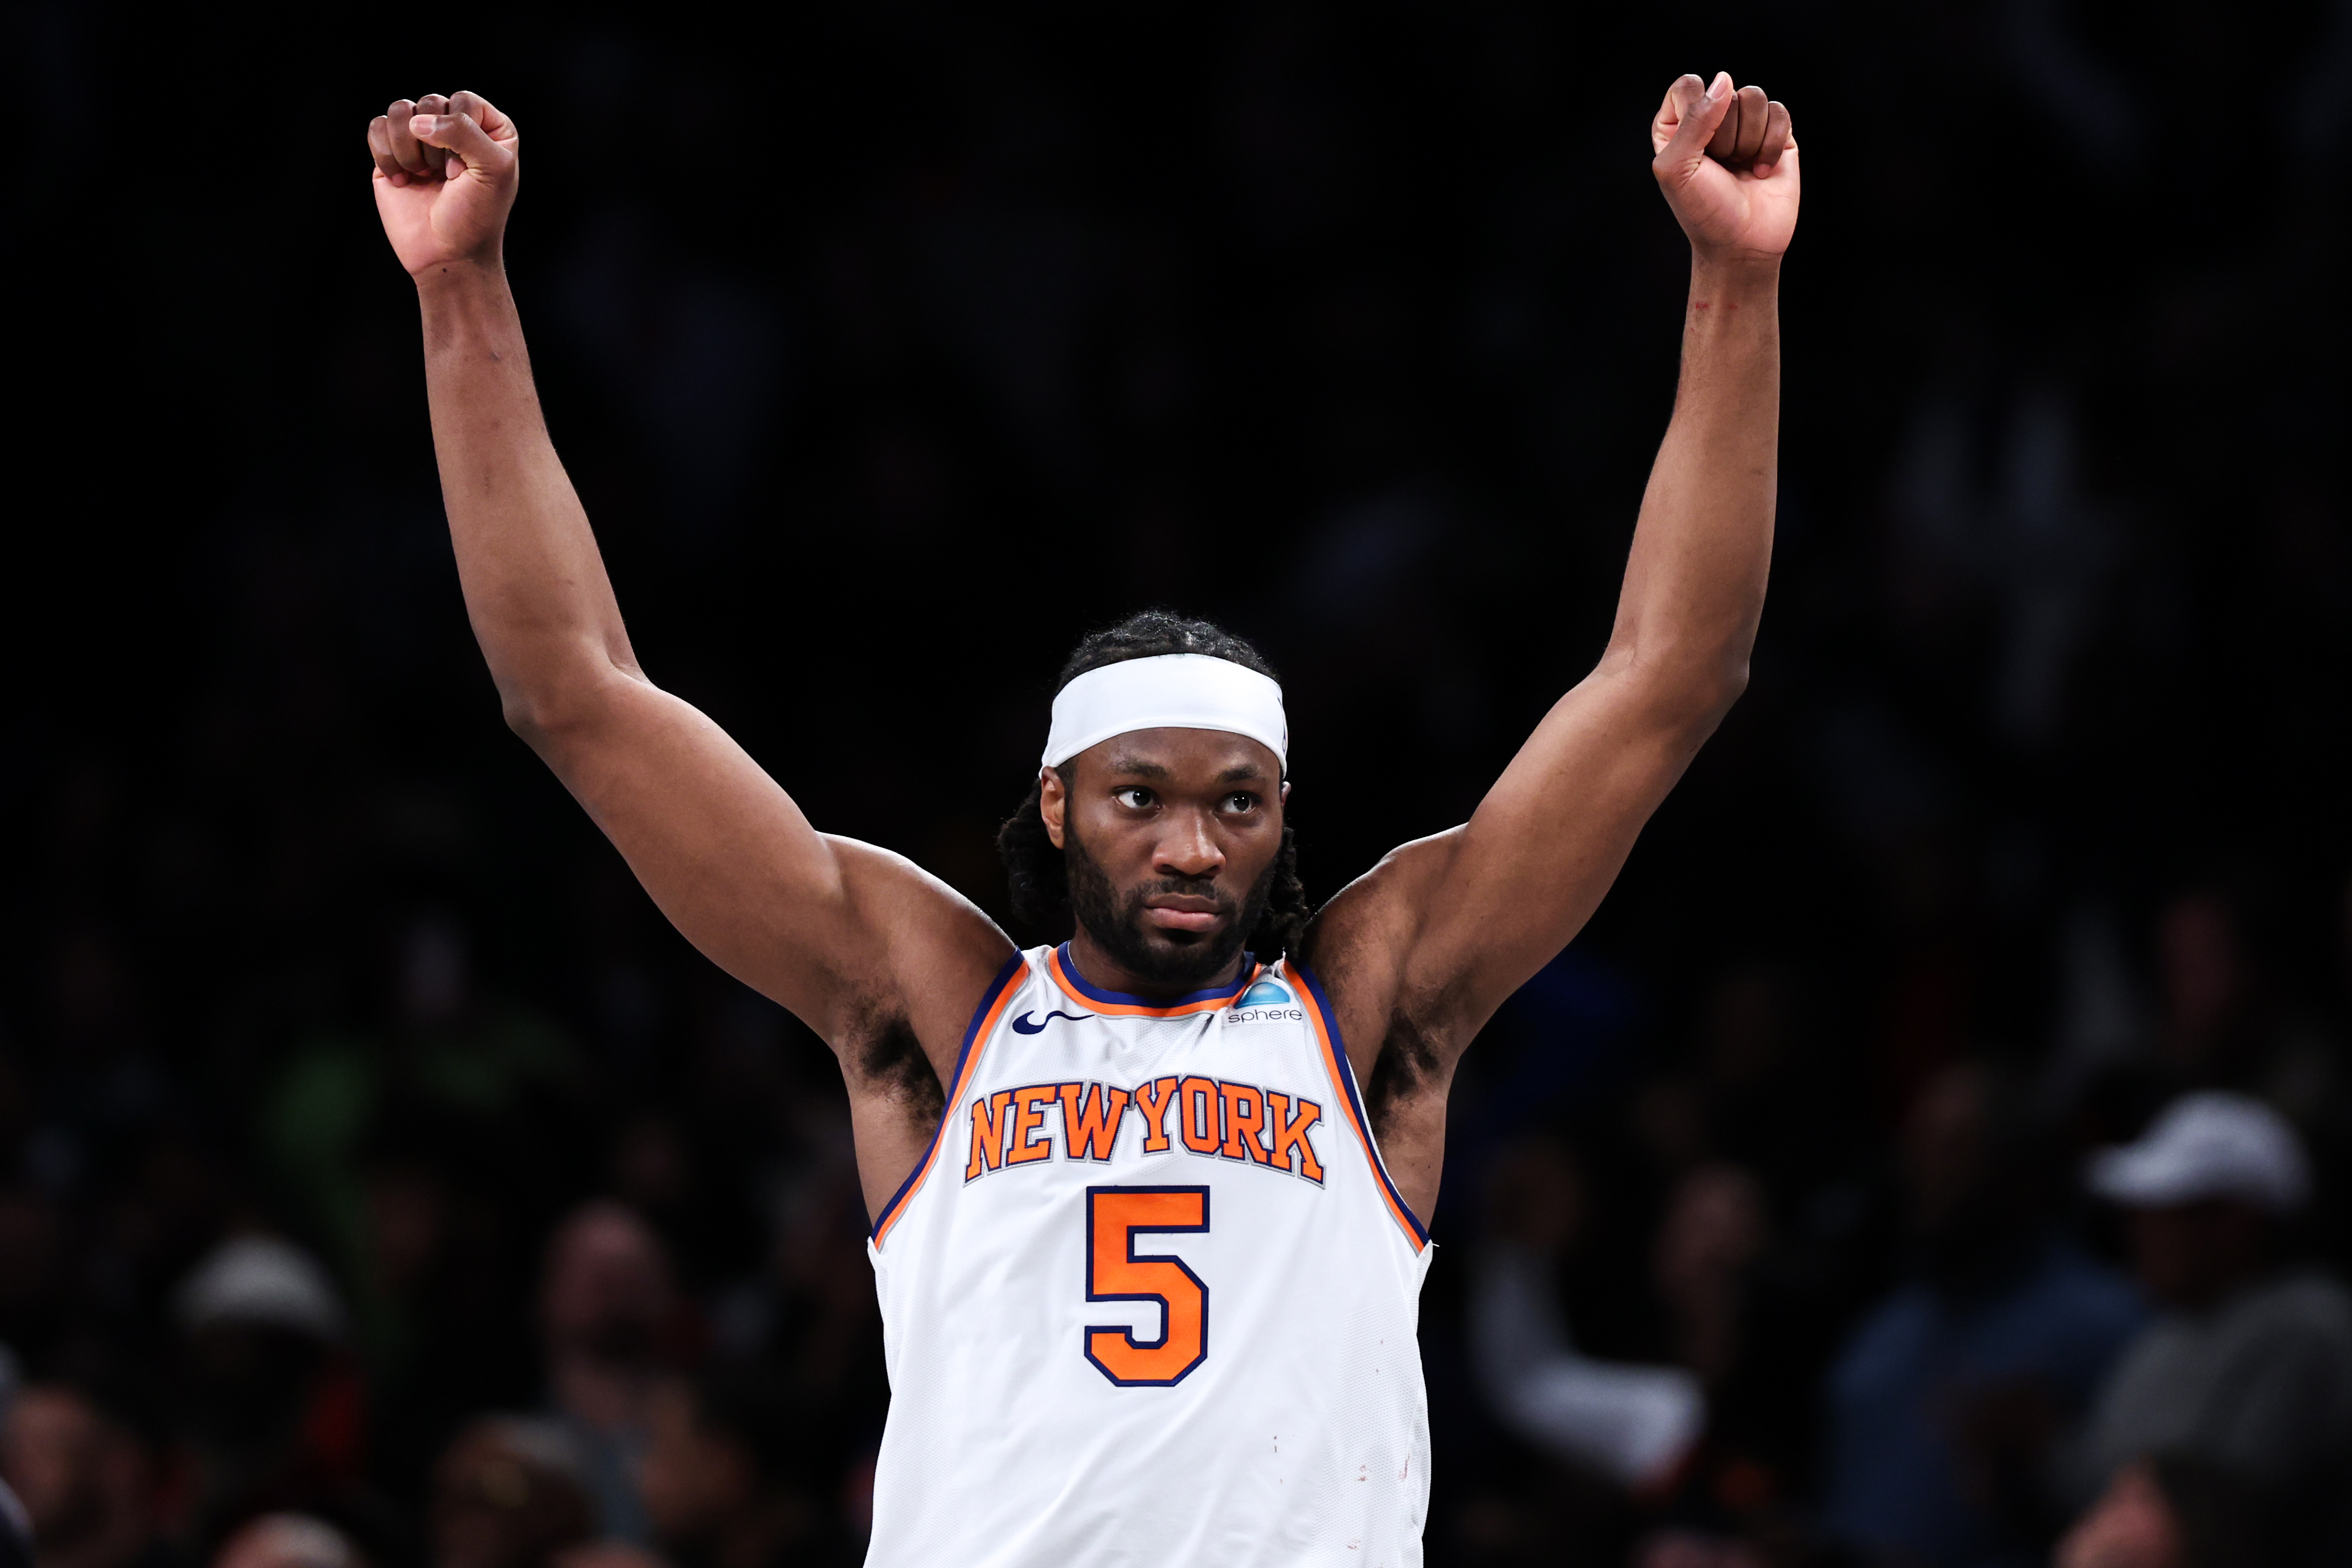 New York Knicks v Brooklyn Nets